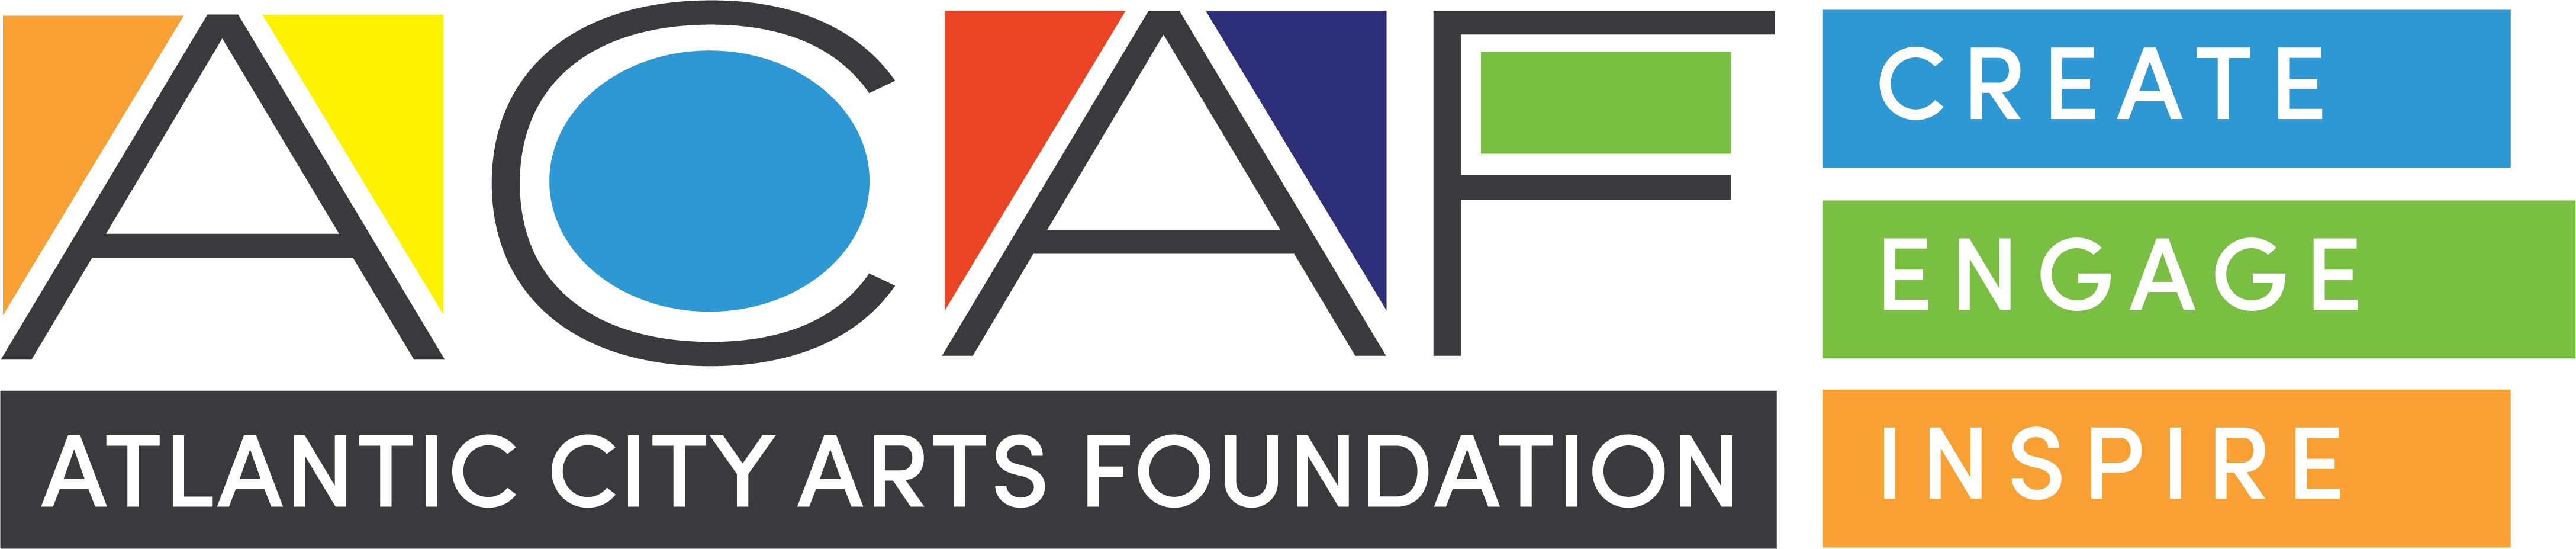 Atlantic City Arts Foundation logo